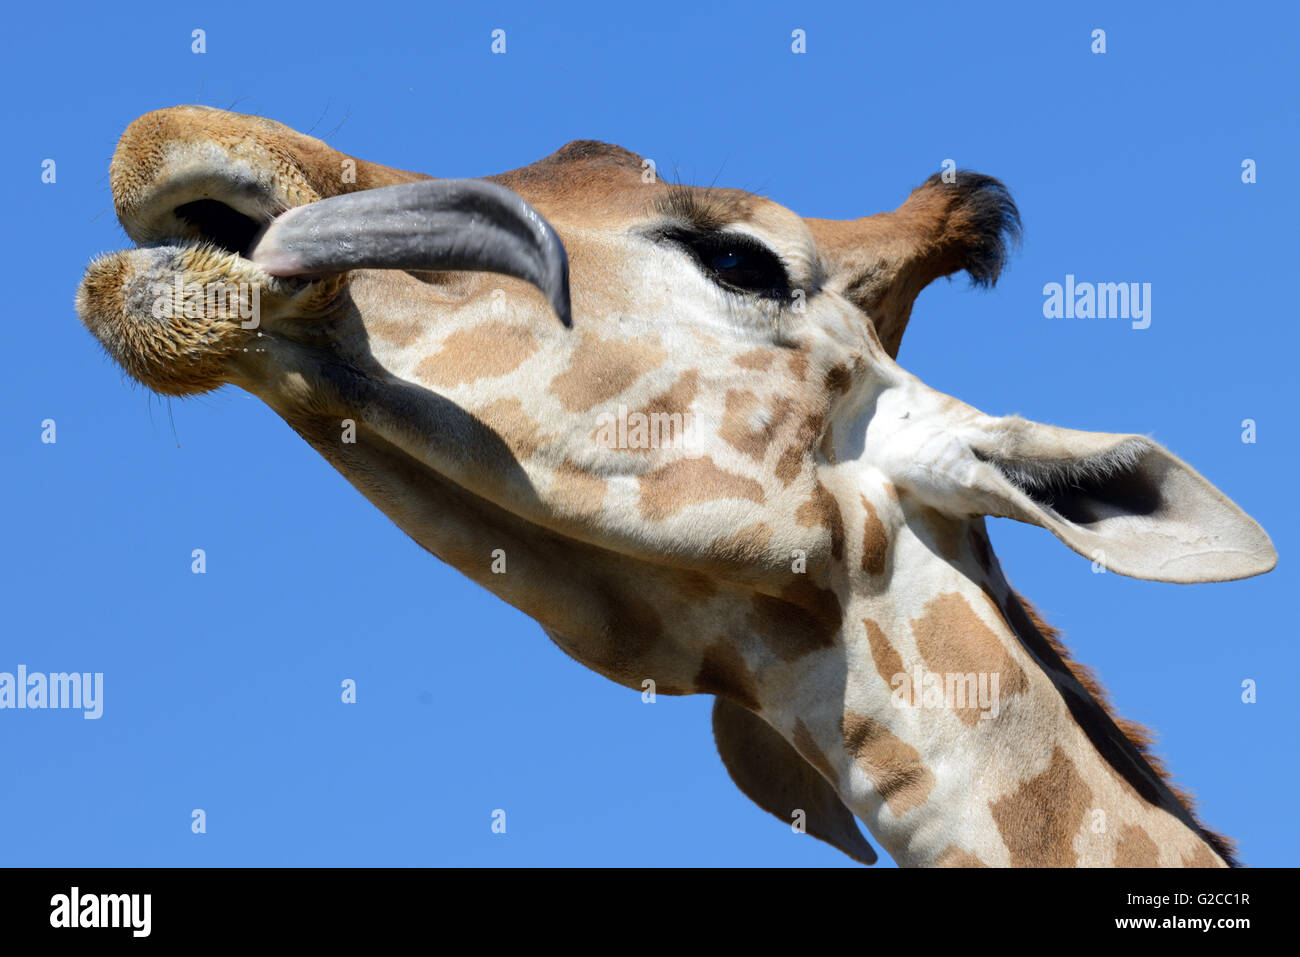 Longue Langue et le chef d'une giraffe réticulée ou Somali Girafe (Giraffa camelopardalis reticulata) Banque D'Images